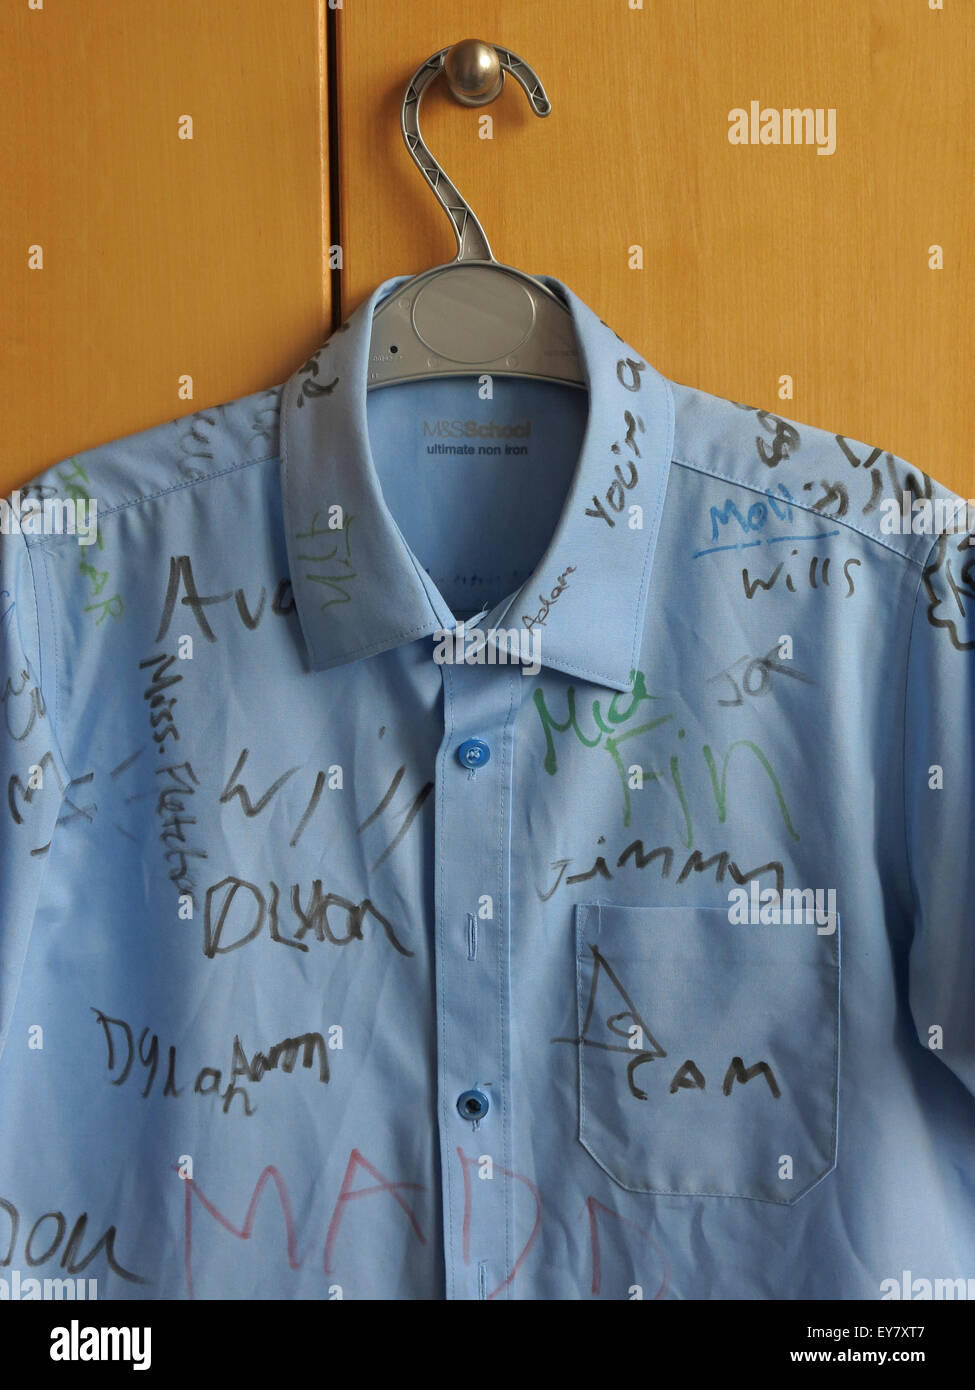 L'École Shirt avec signatures de camarades Banque D'Images